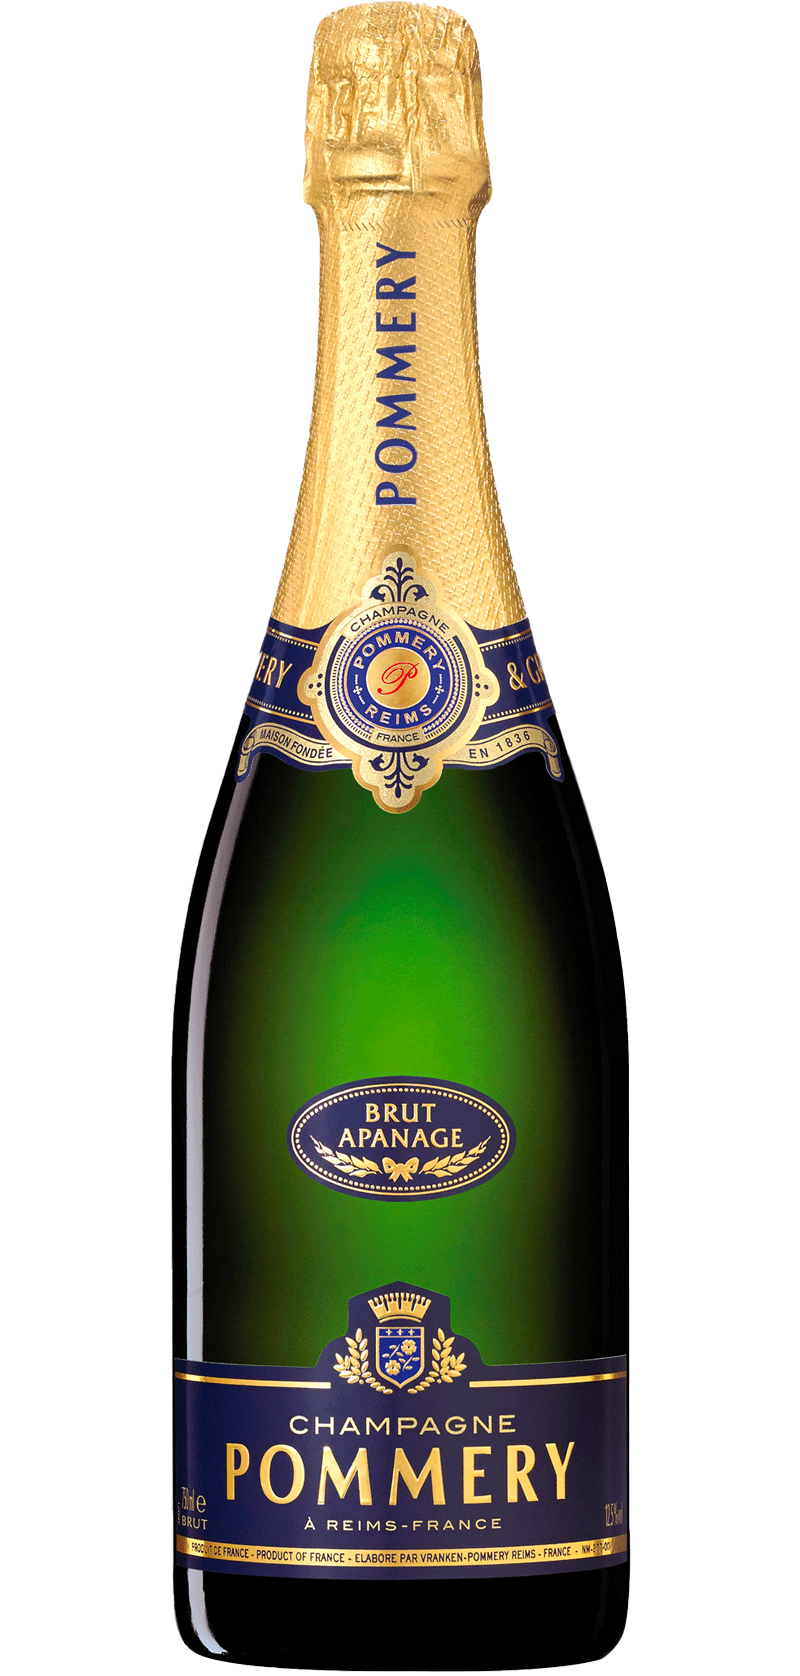 Pommery - Royal Brut Apanage - Champagne